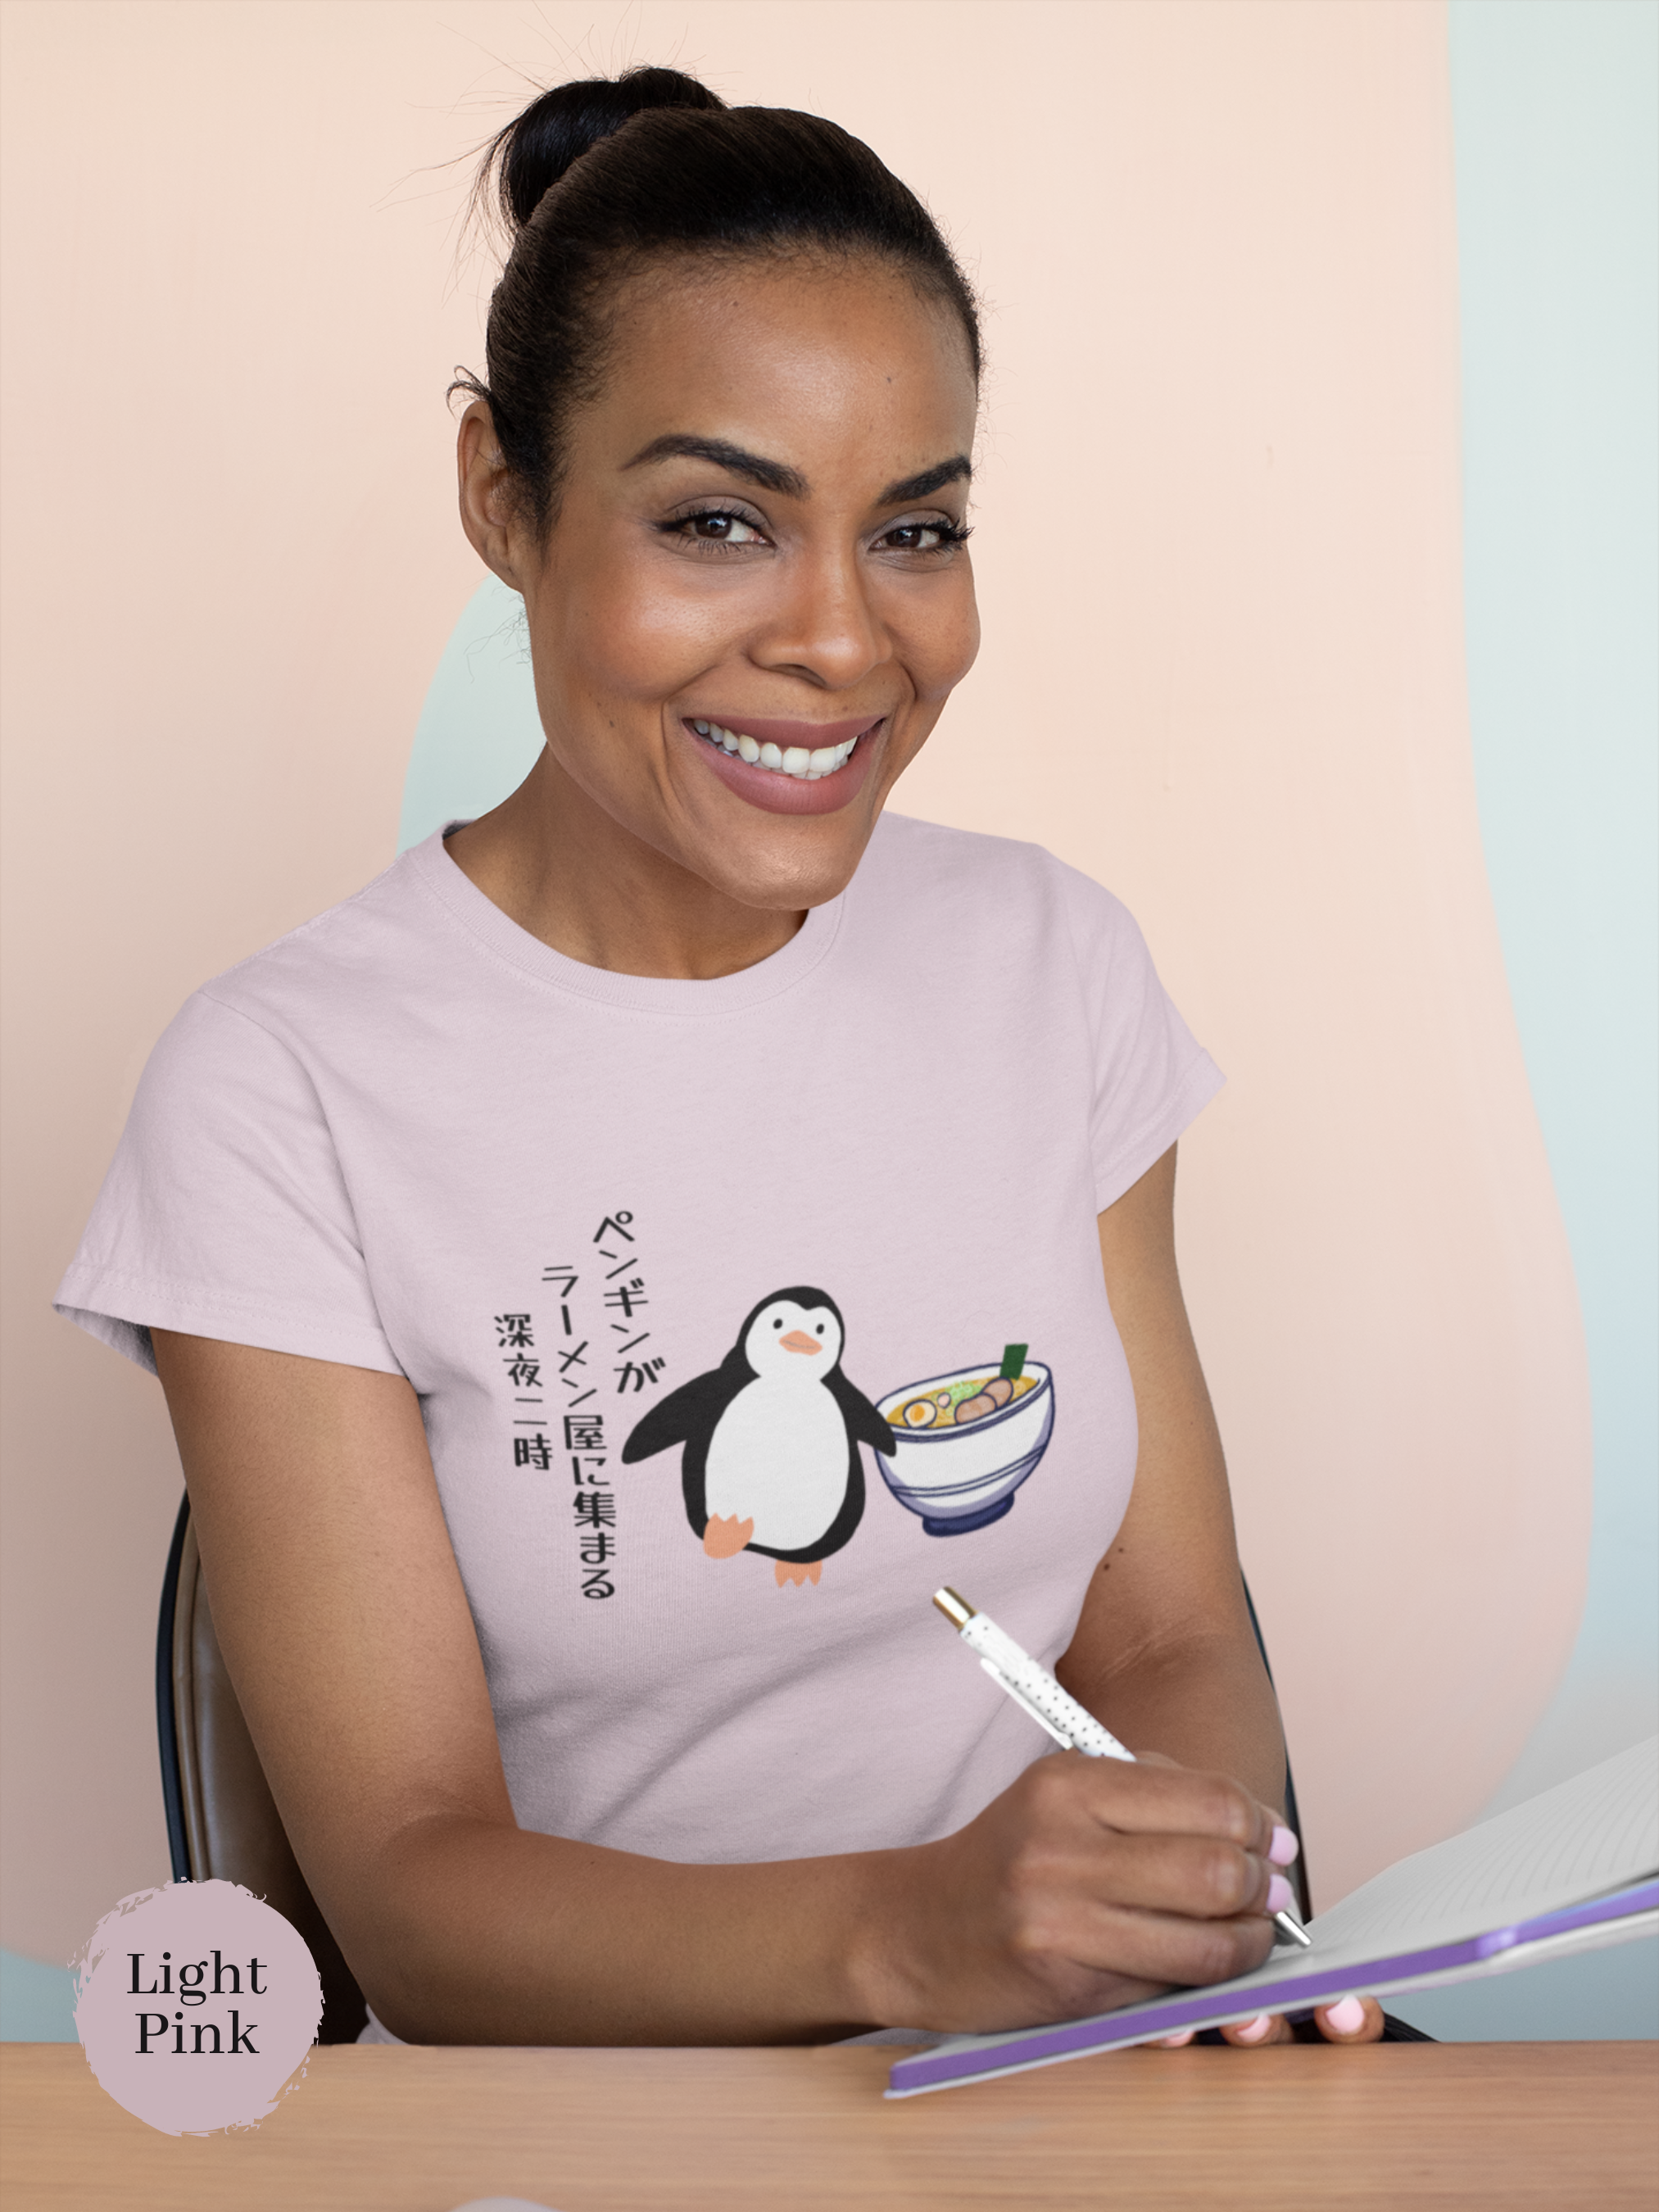 Ramen T-shirt: Penguin Gathering at Midnight Ramen Shop - Japanese Haiku and Ramen Art Design - Foodie Shirt